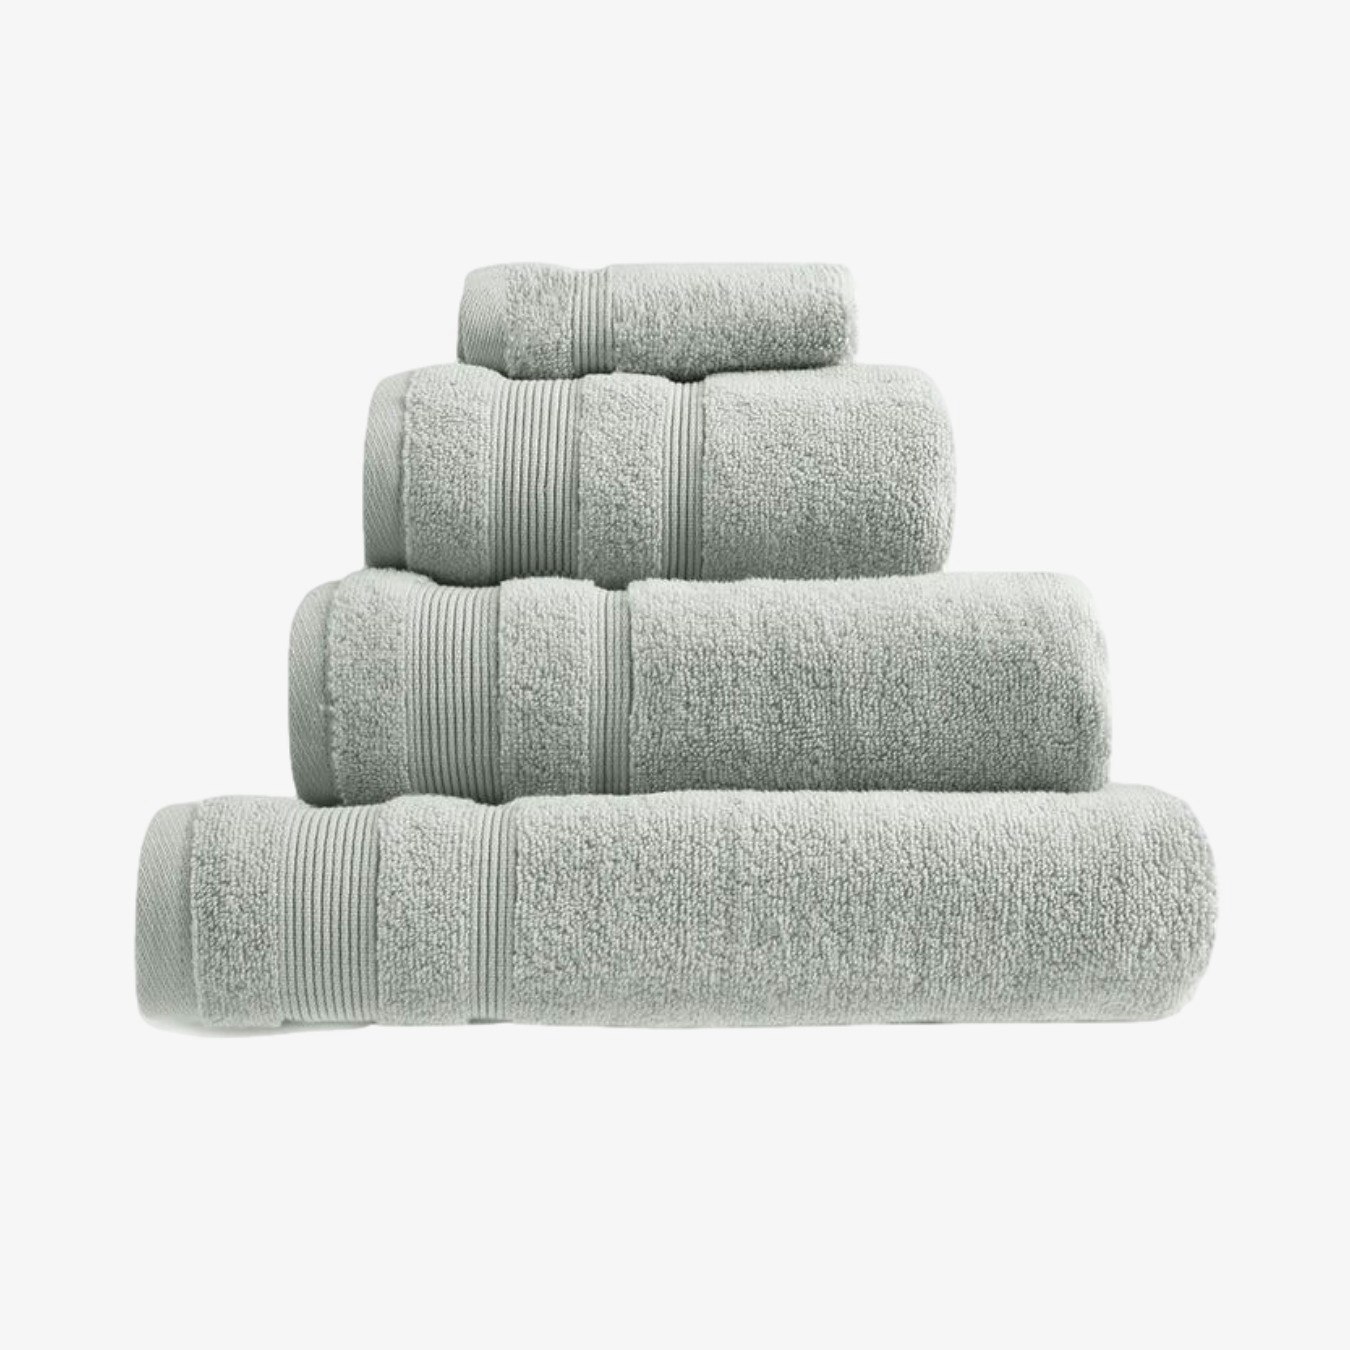 Dove Grey Egyptian Cotton Towel